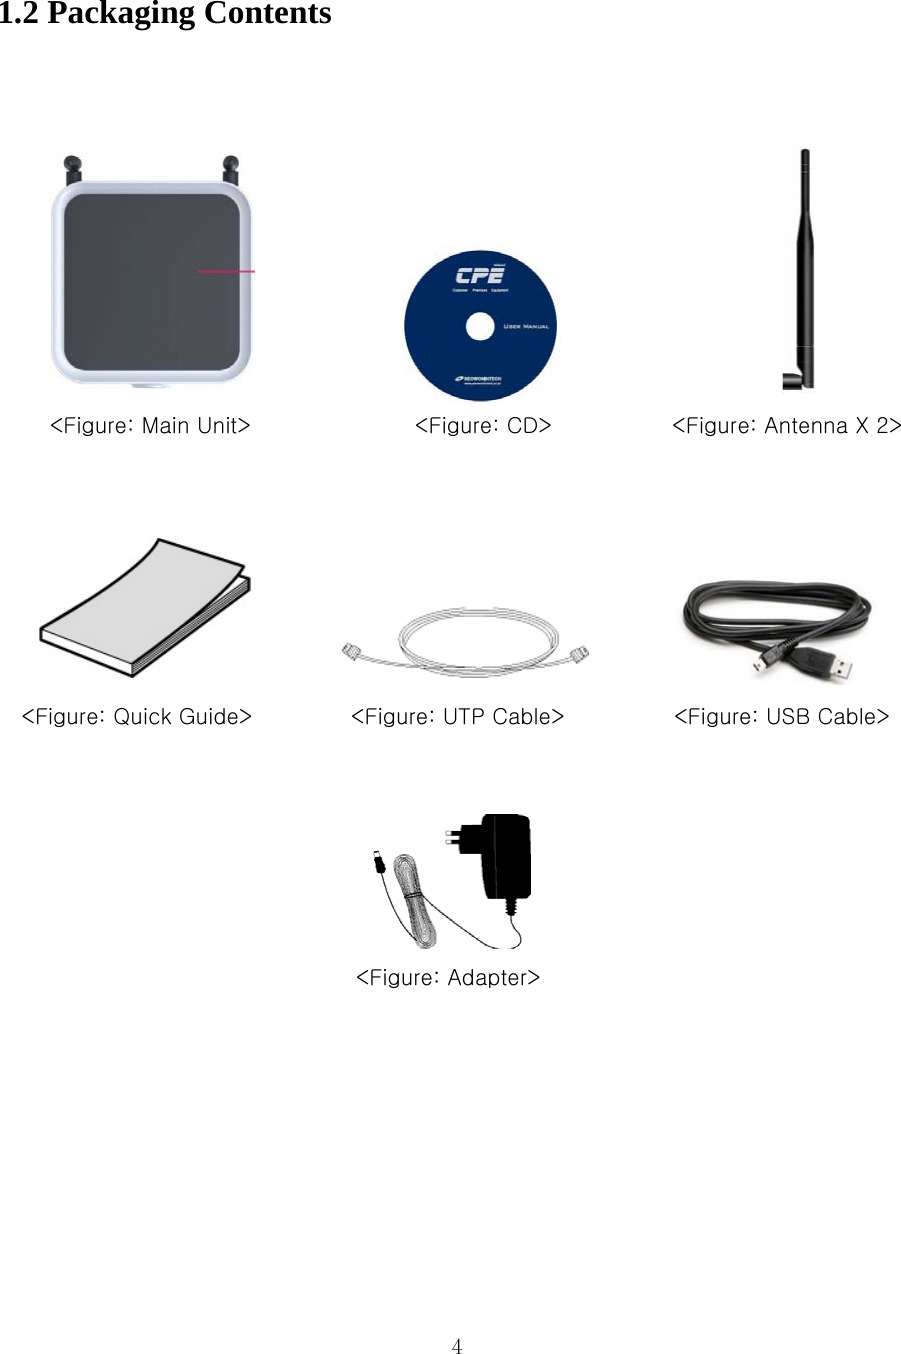  41.2 Packaging Contents           &lt;Figure: Main Unit&gt;               &lt;Figure: CD&gt;           &lt;Figure: Antenna X 2&gt; &lt;Figure: Quick Guide&gt;         &lt;Figure: UTP Cable&gt;          &lt;Figure: USB Cable&gt;&lt;Figure: Adapter&gt; 